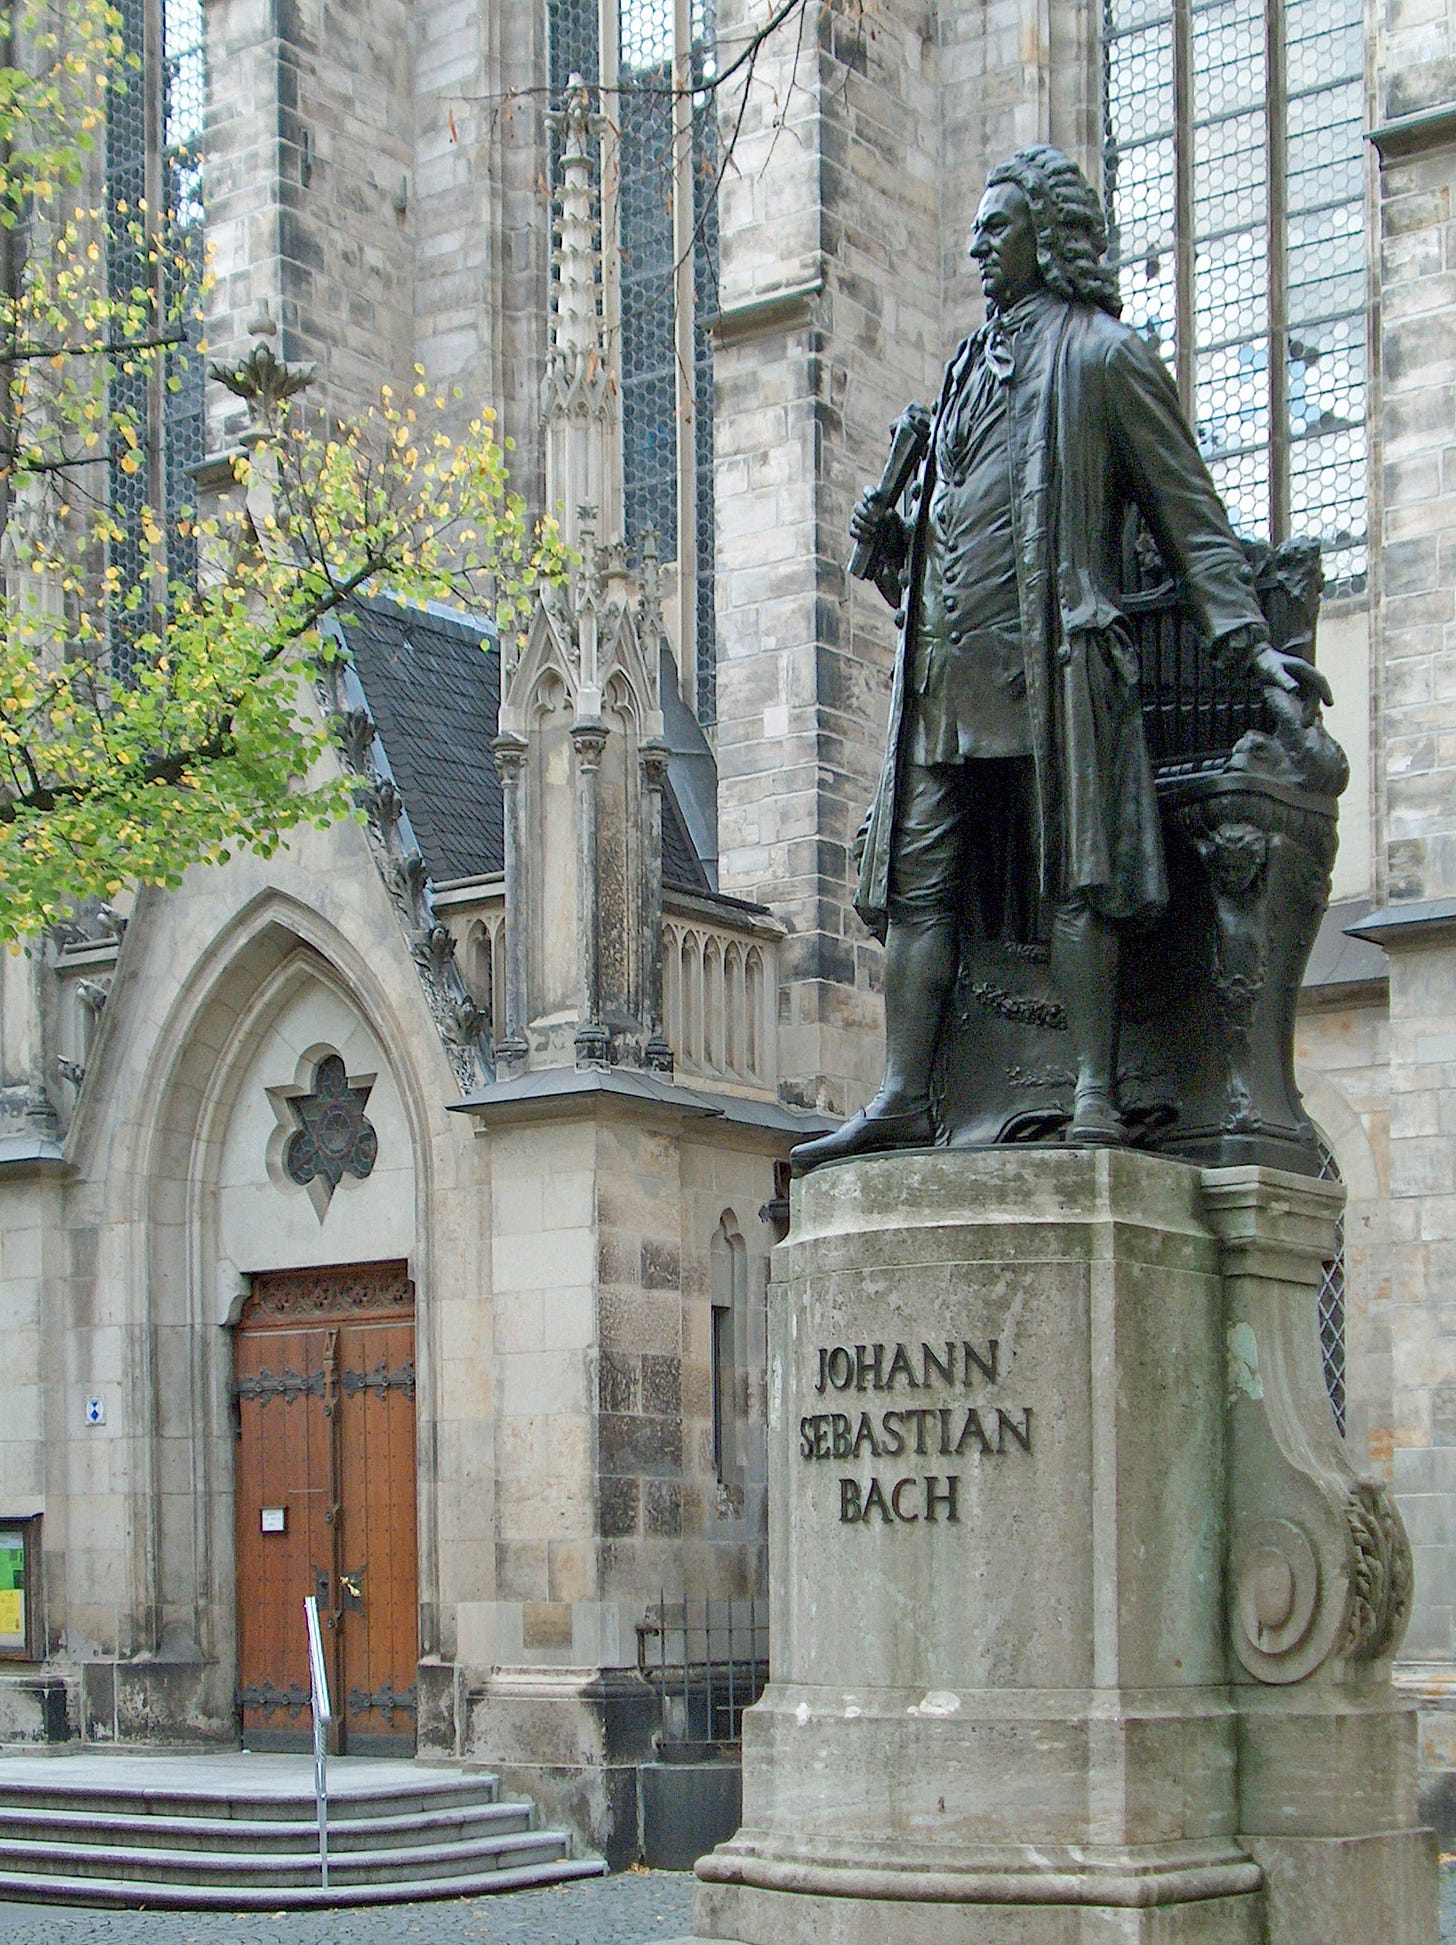 File:Statue of J.S. Bach in Leipzig.jpg - Wikipedia